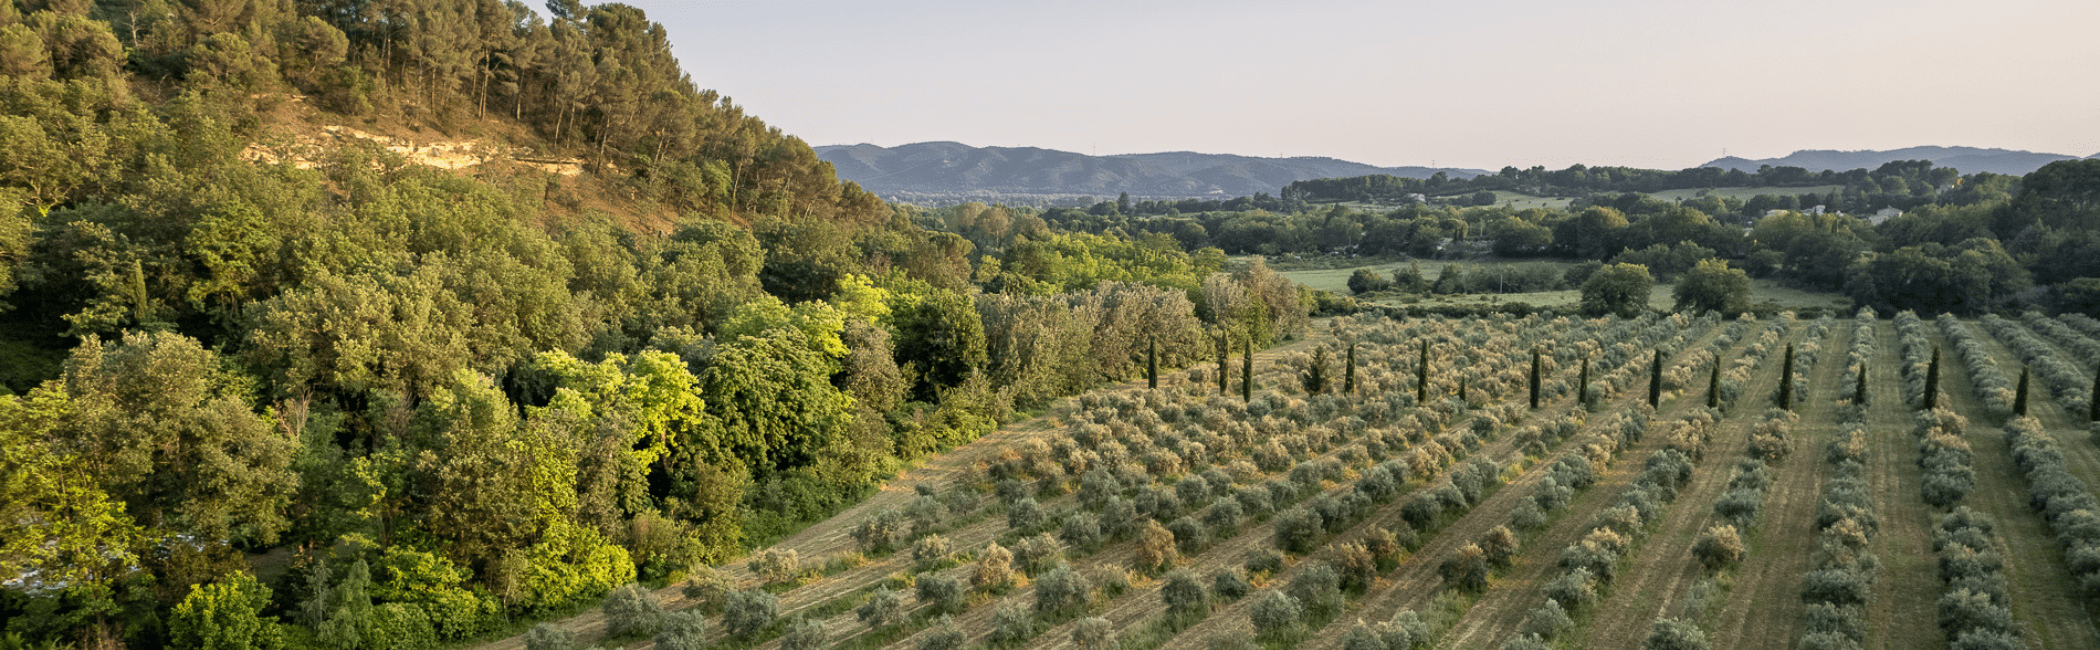 Paysage champs oliveraie